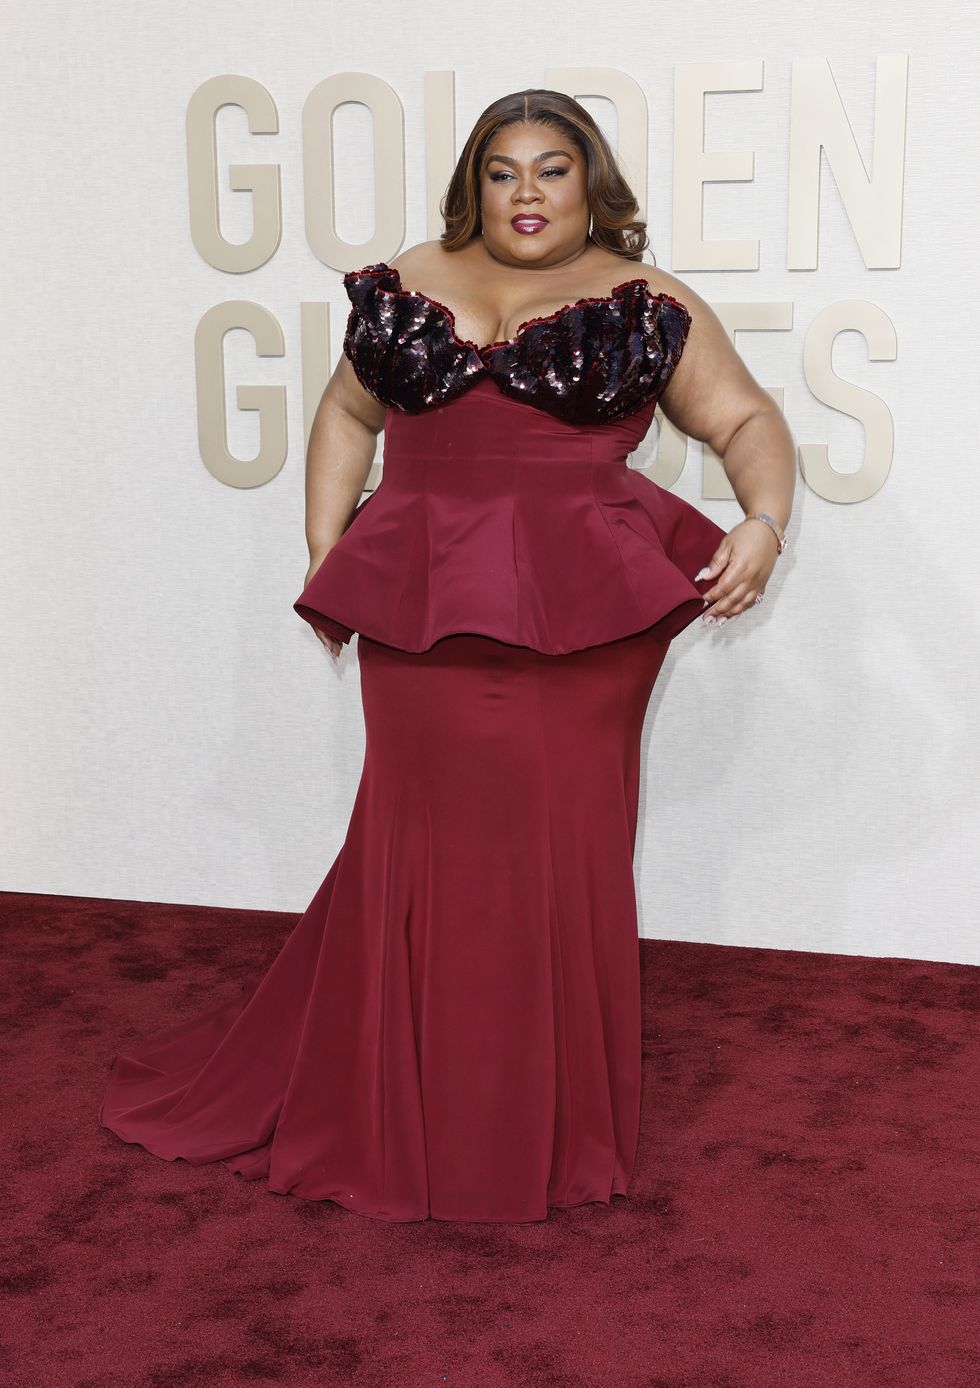 Feminine Frills Dresses Inspired by Golden Globes Fashion - Sydne Style